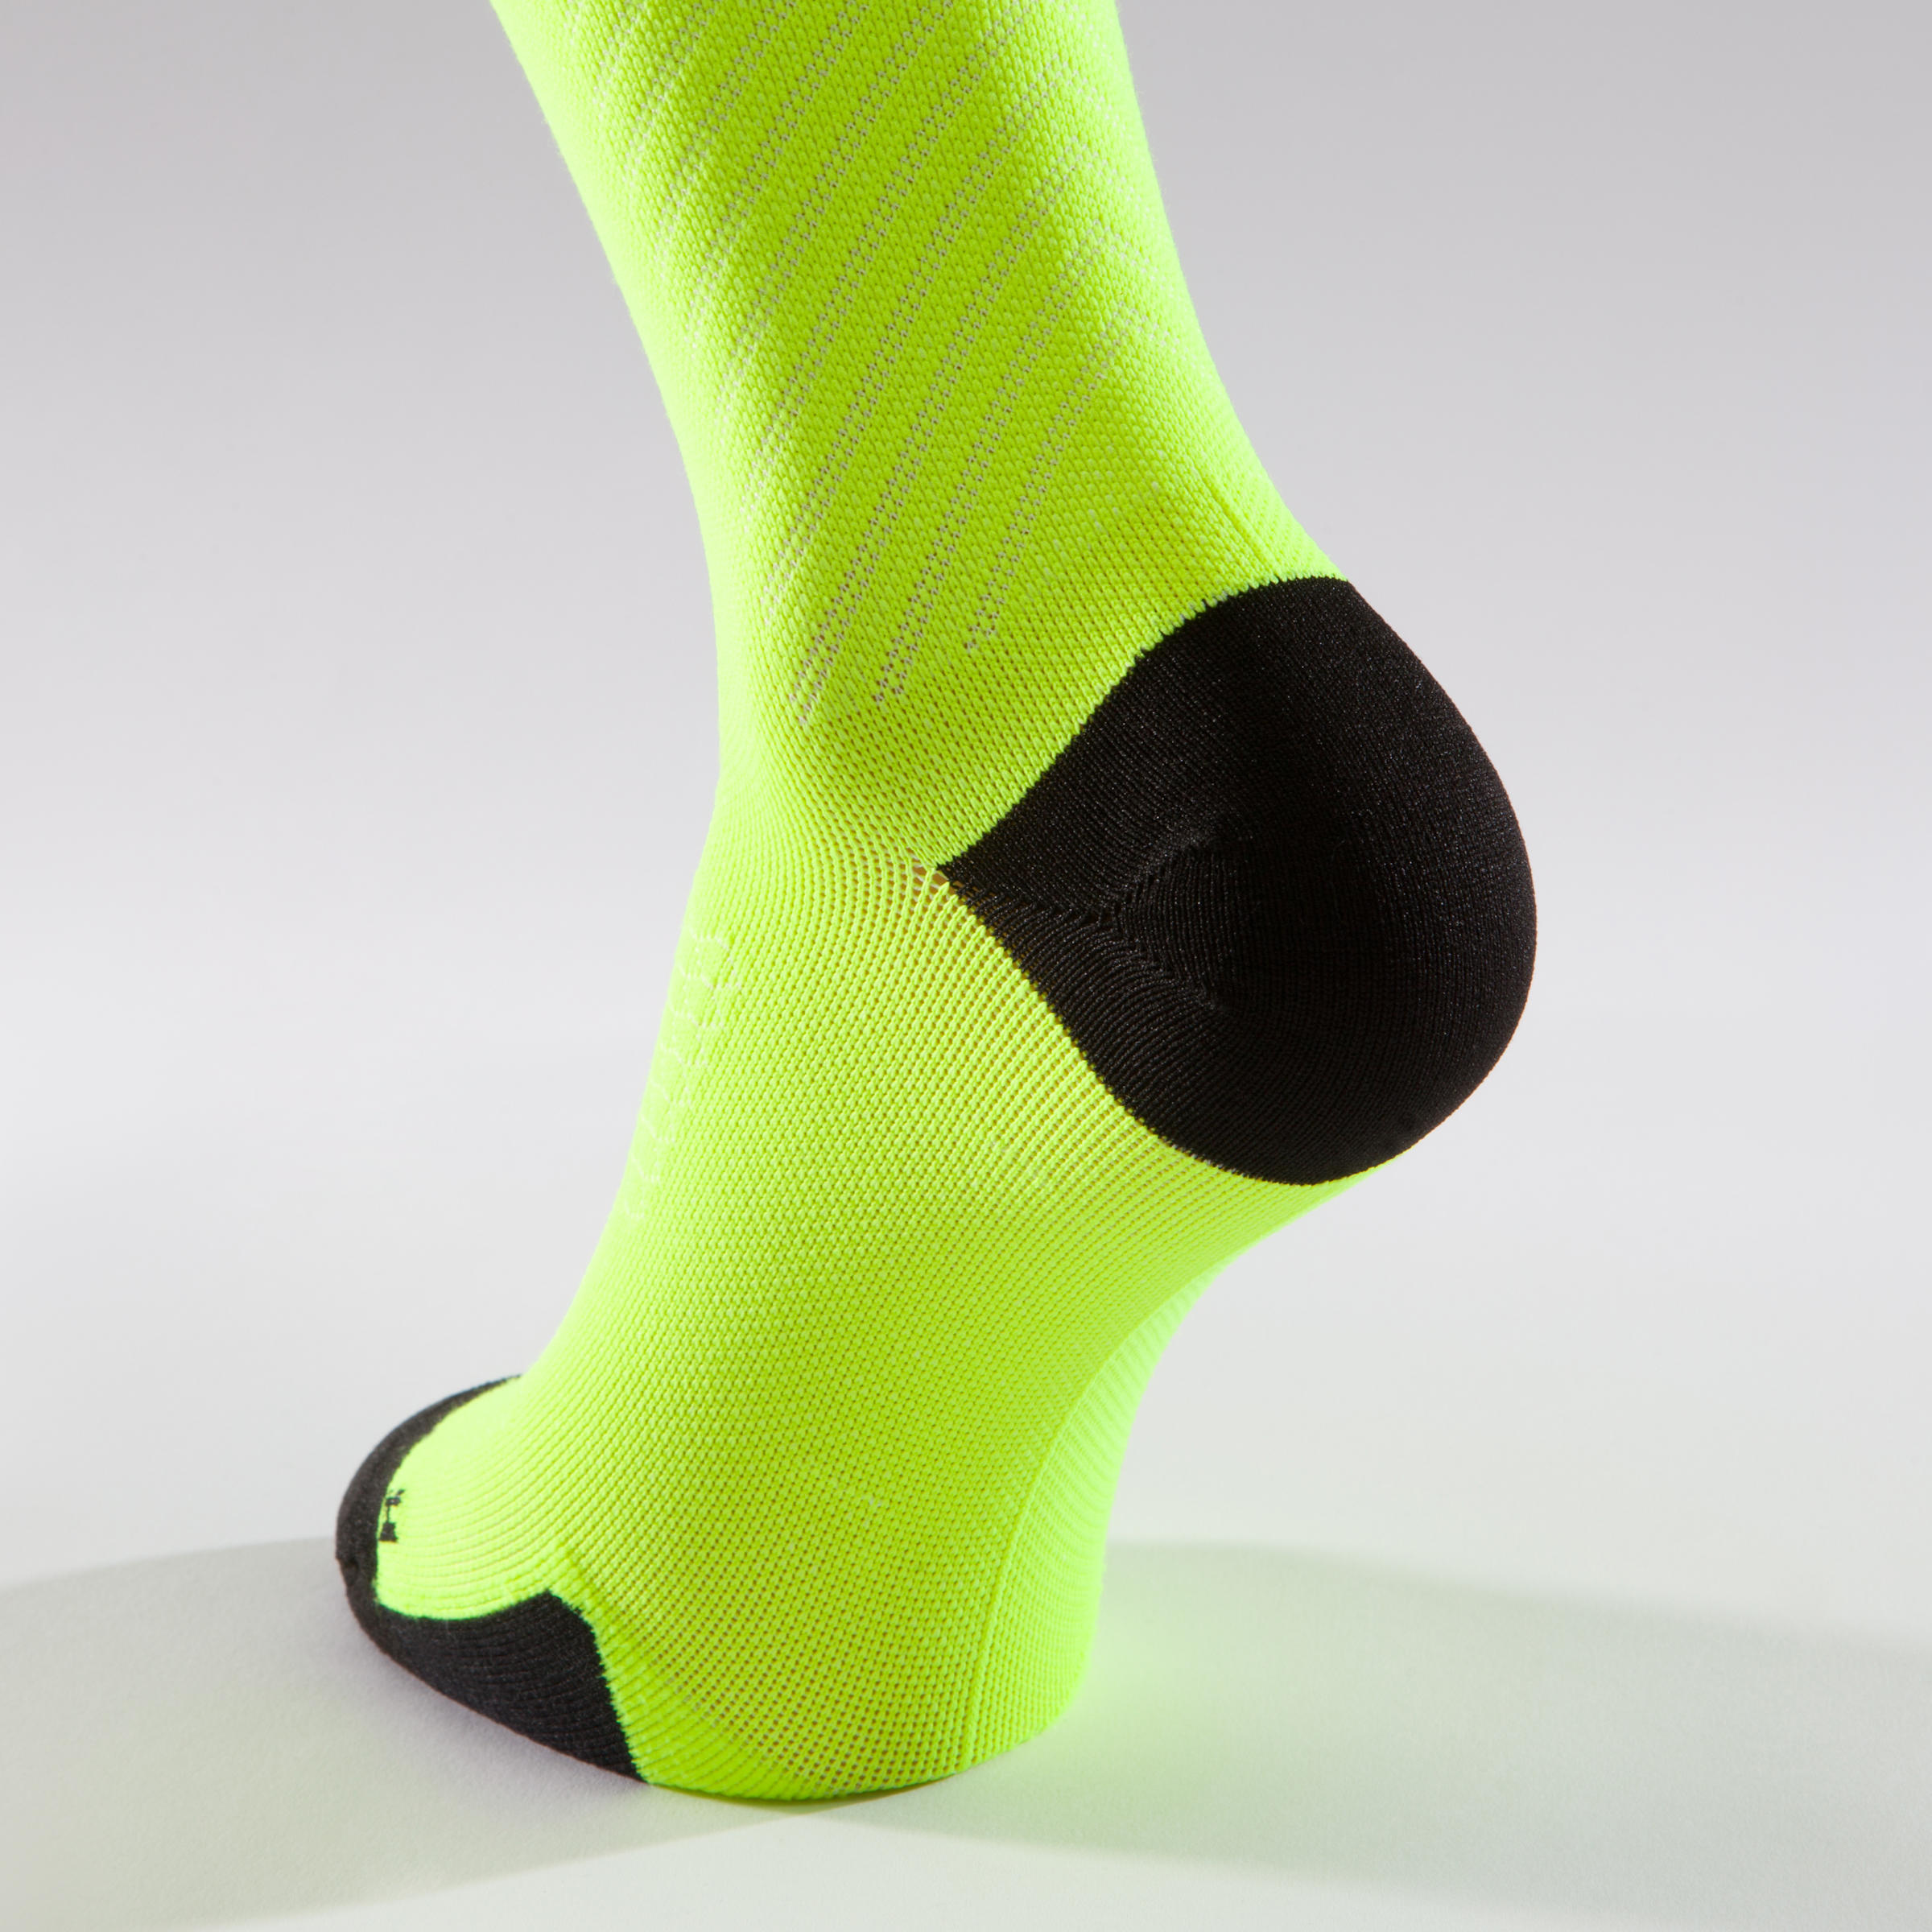 900 Road Cycling Socks - Neon Yellow/Black 7/7